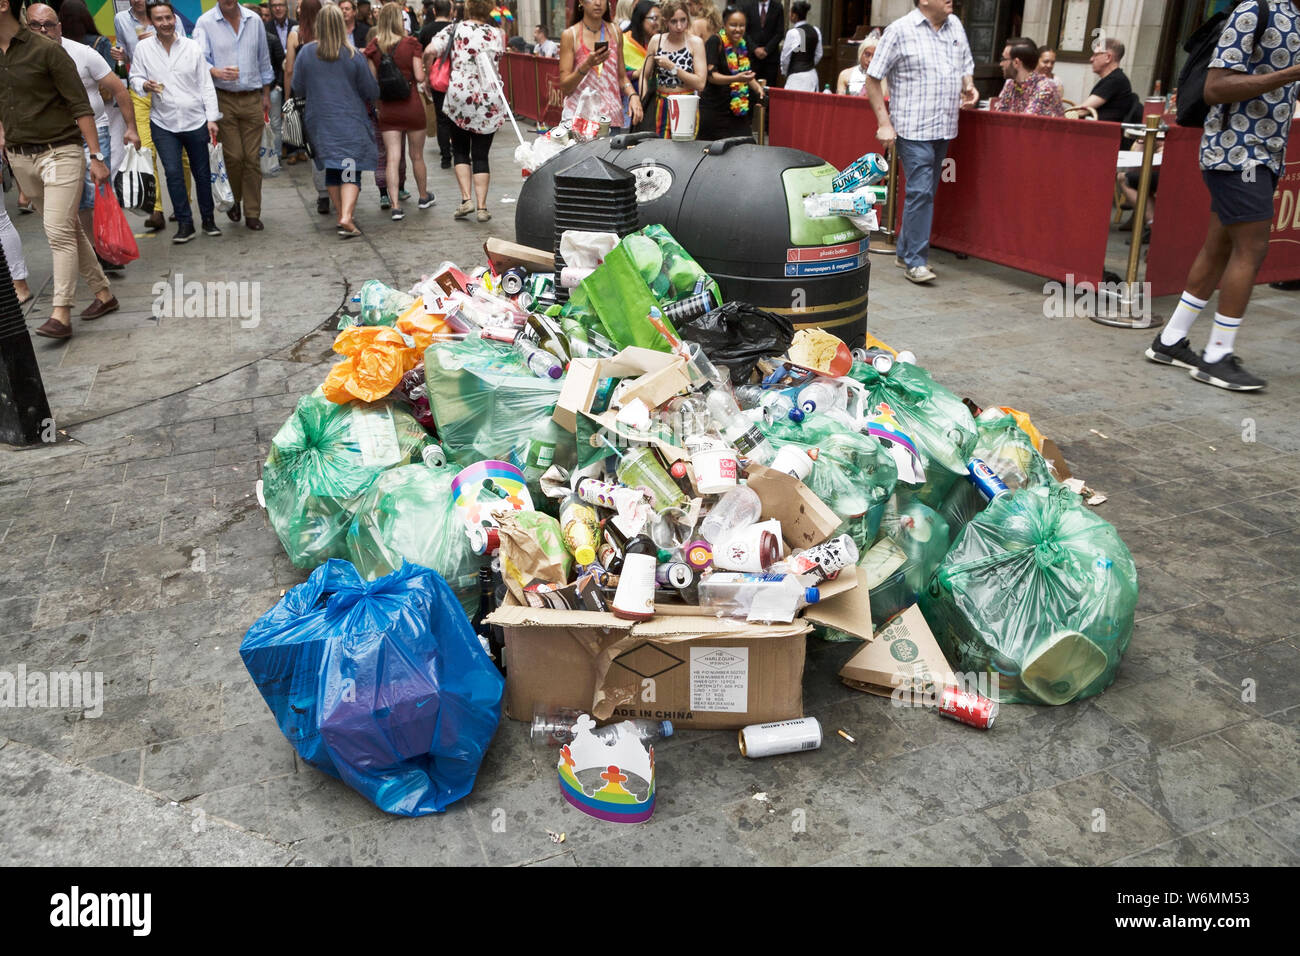 Street rubbish: plastic waste, consumerism, consumer rubbish, consumer waste, bins overflowing. Litter London rubbish. Keep Britain tidy. UK trash. Stock Photo